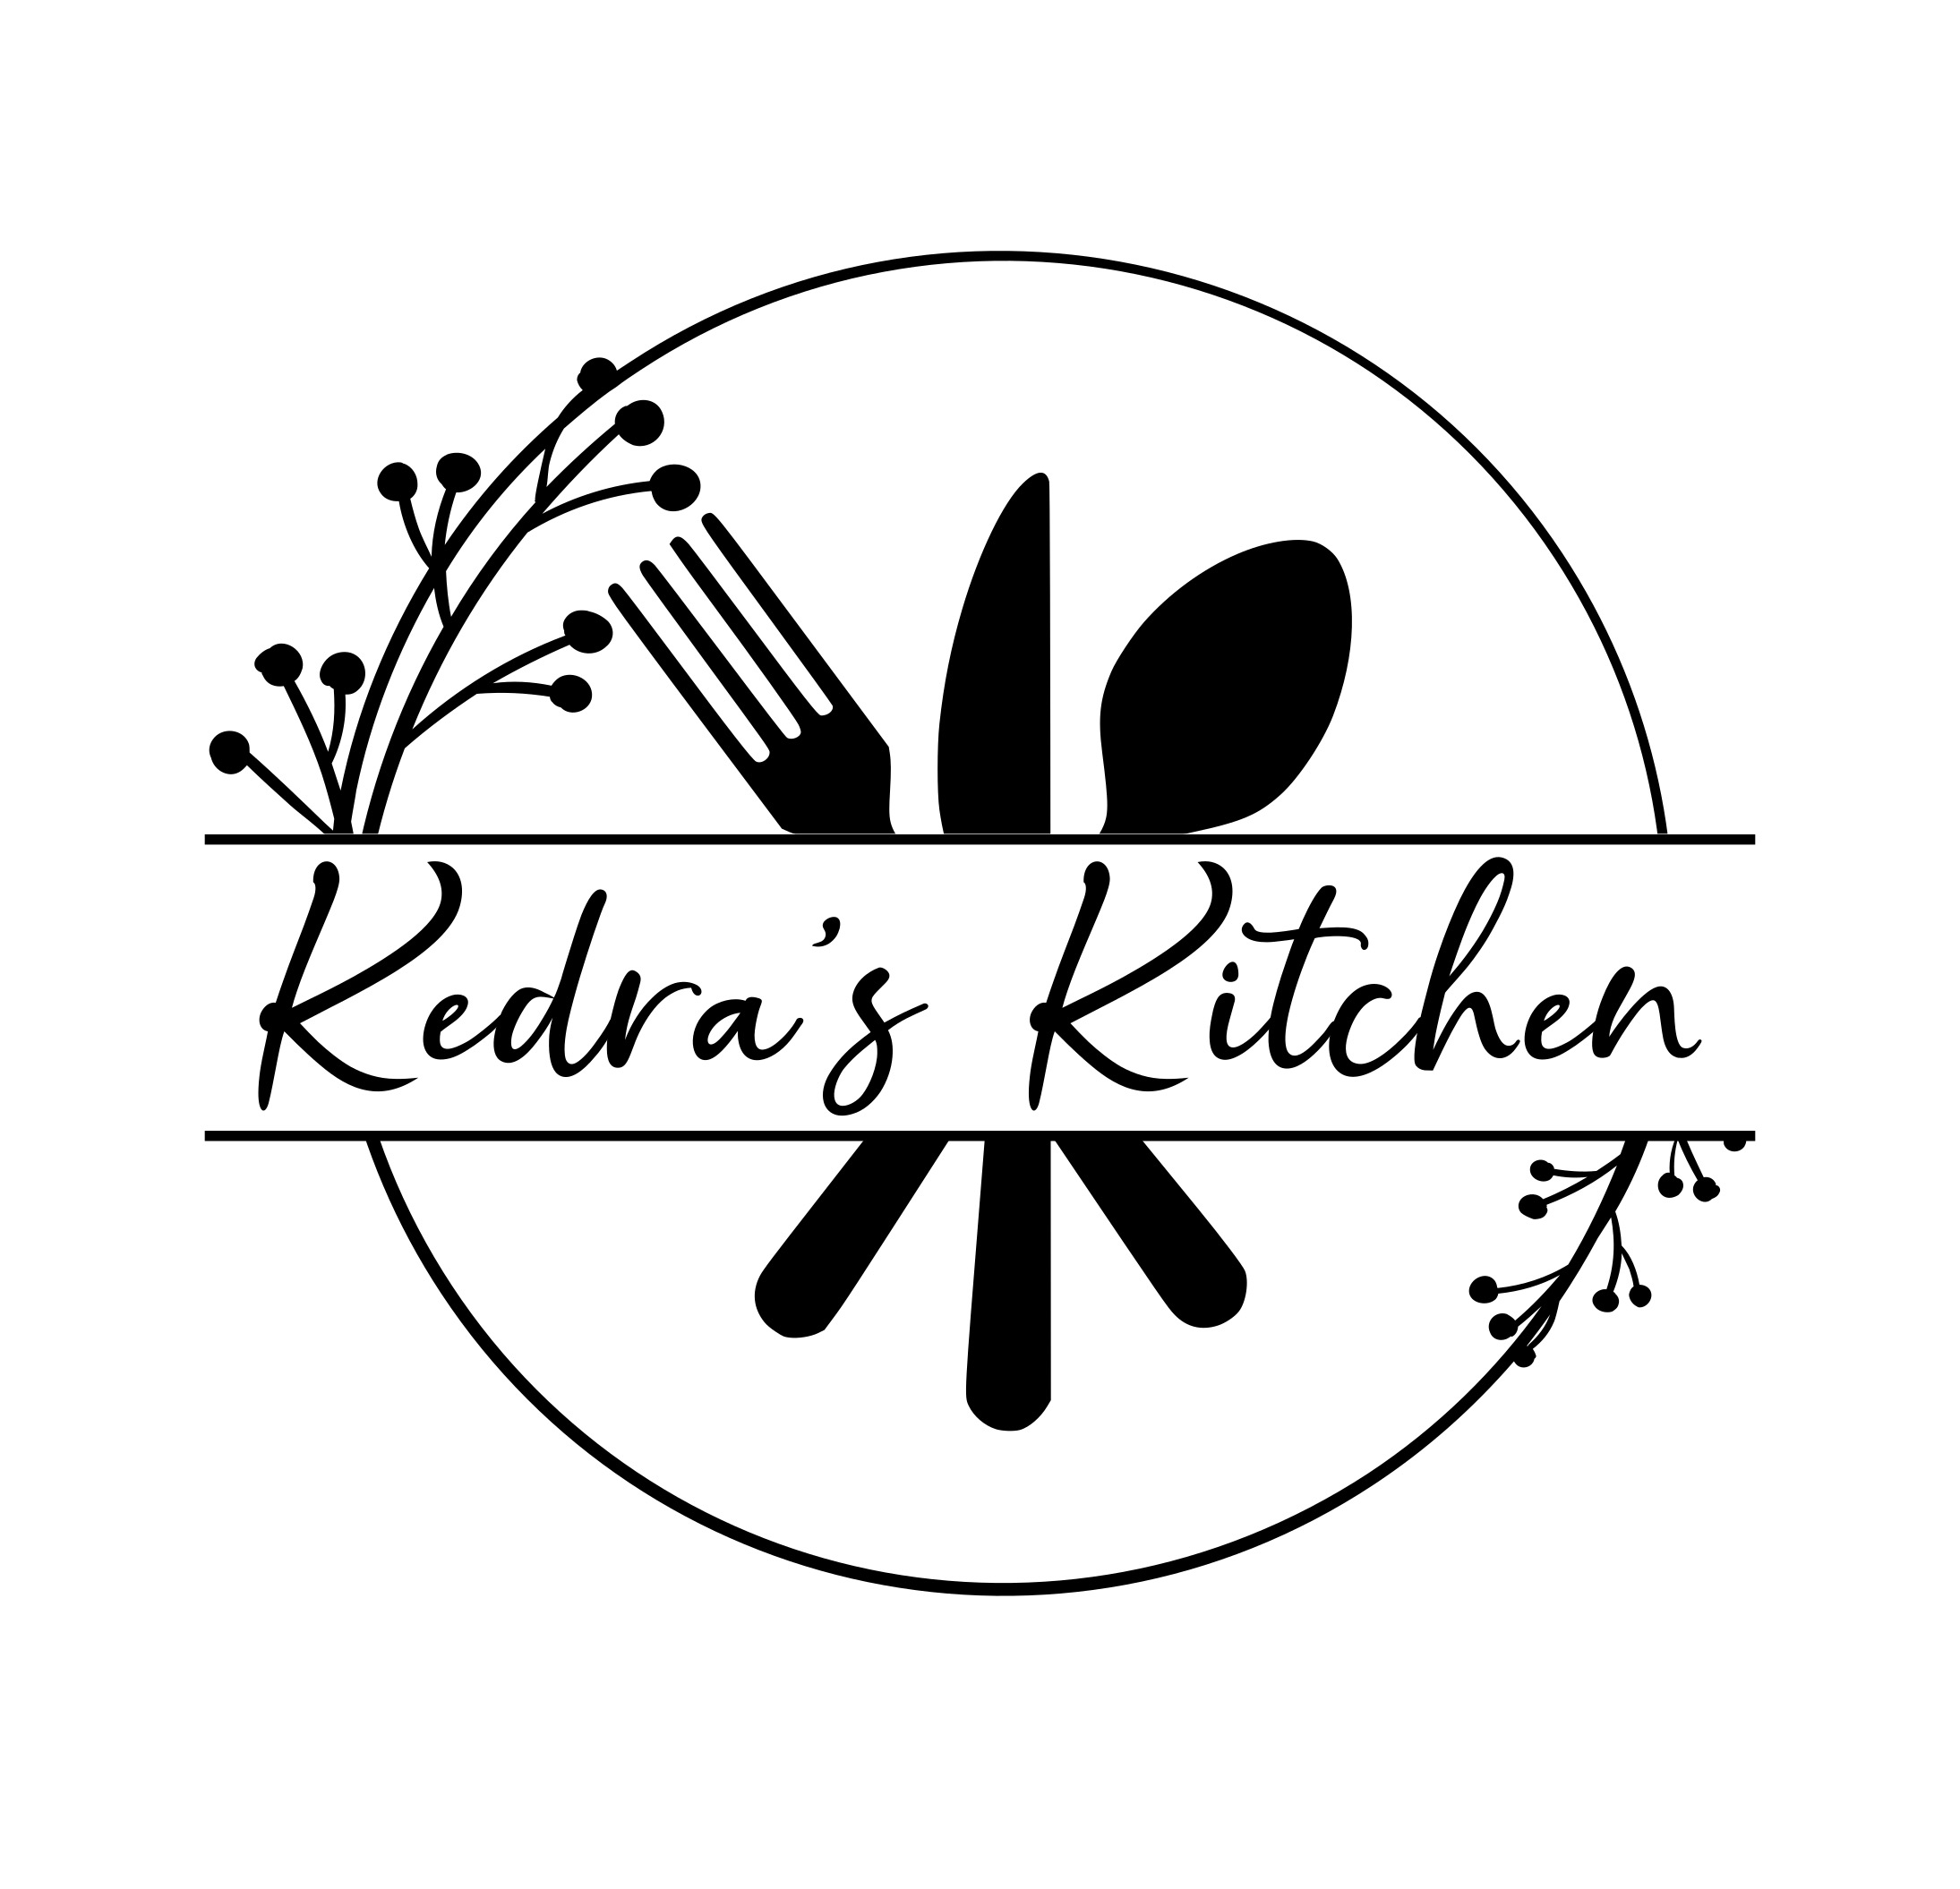 Kedra's Kitchen